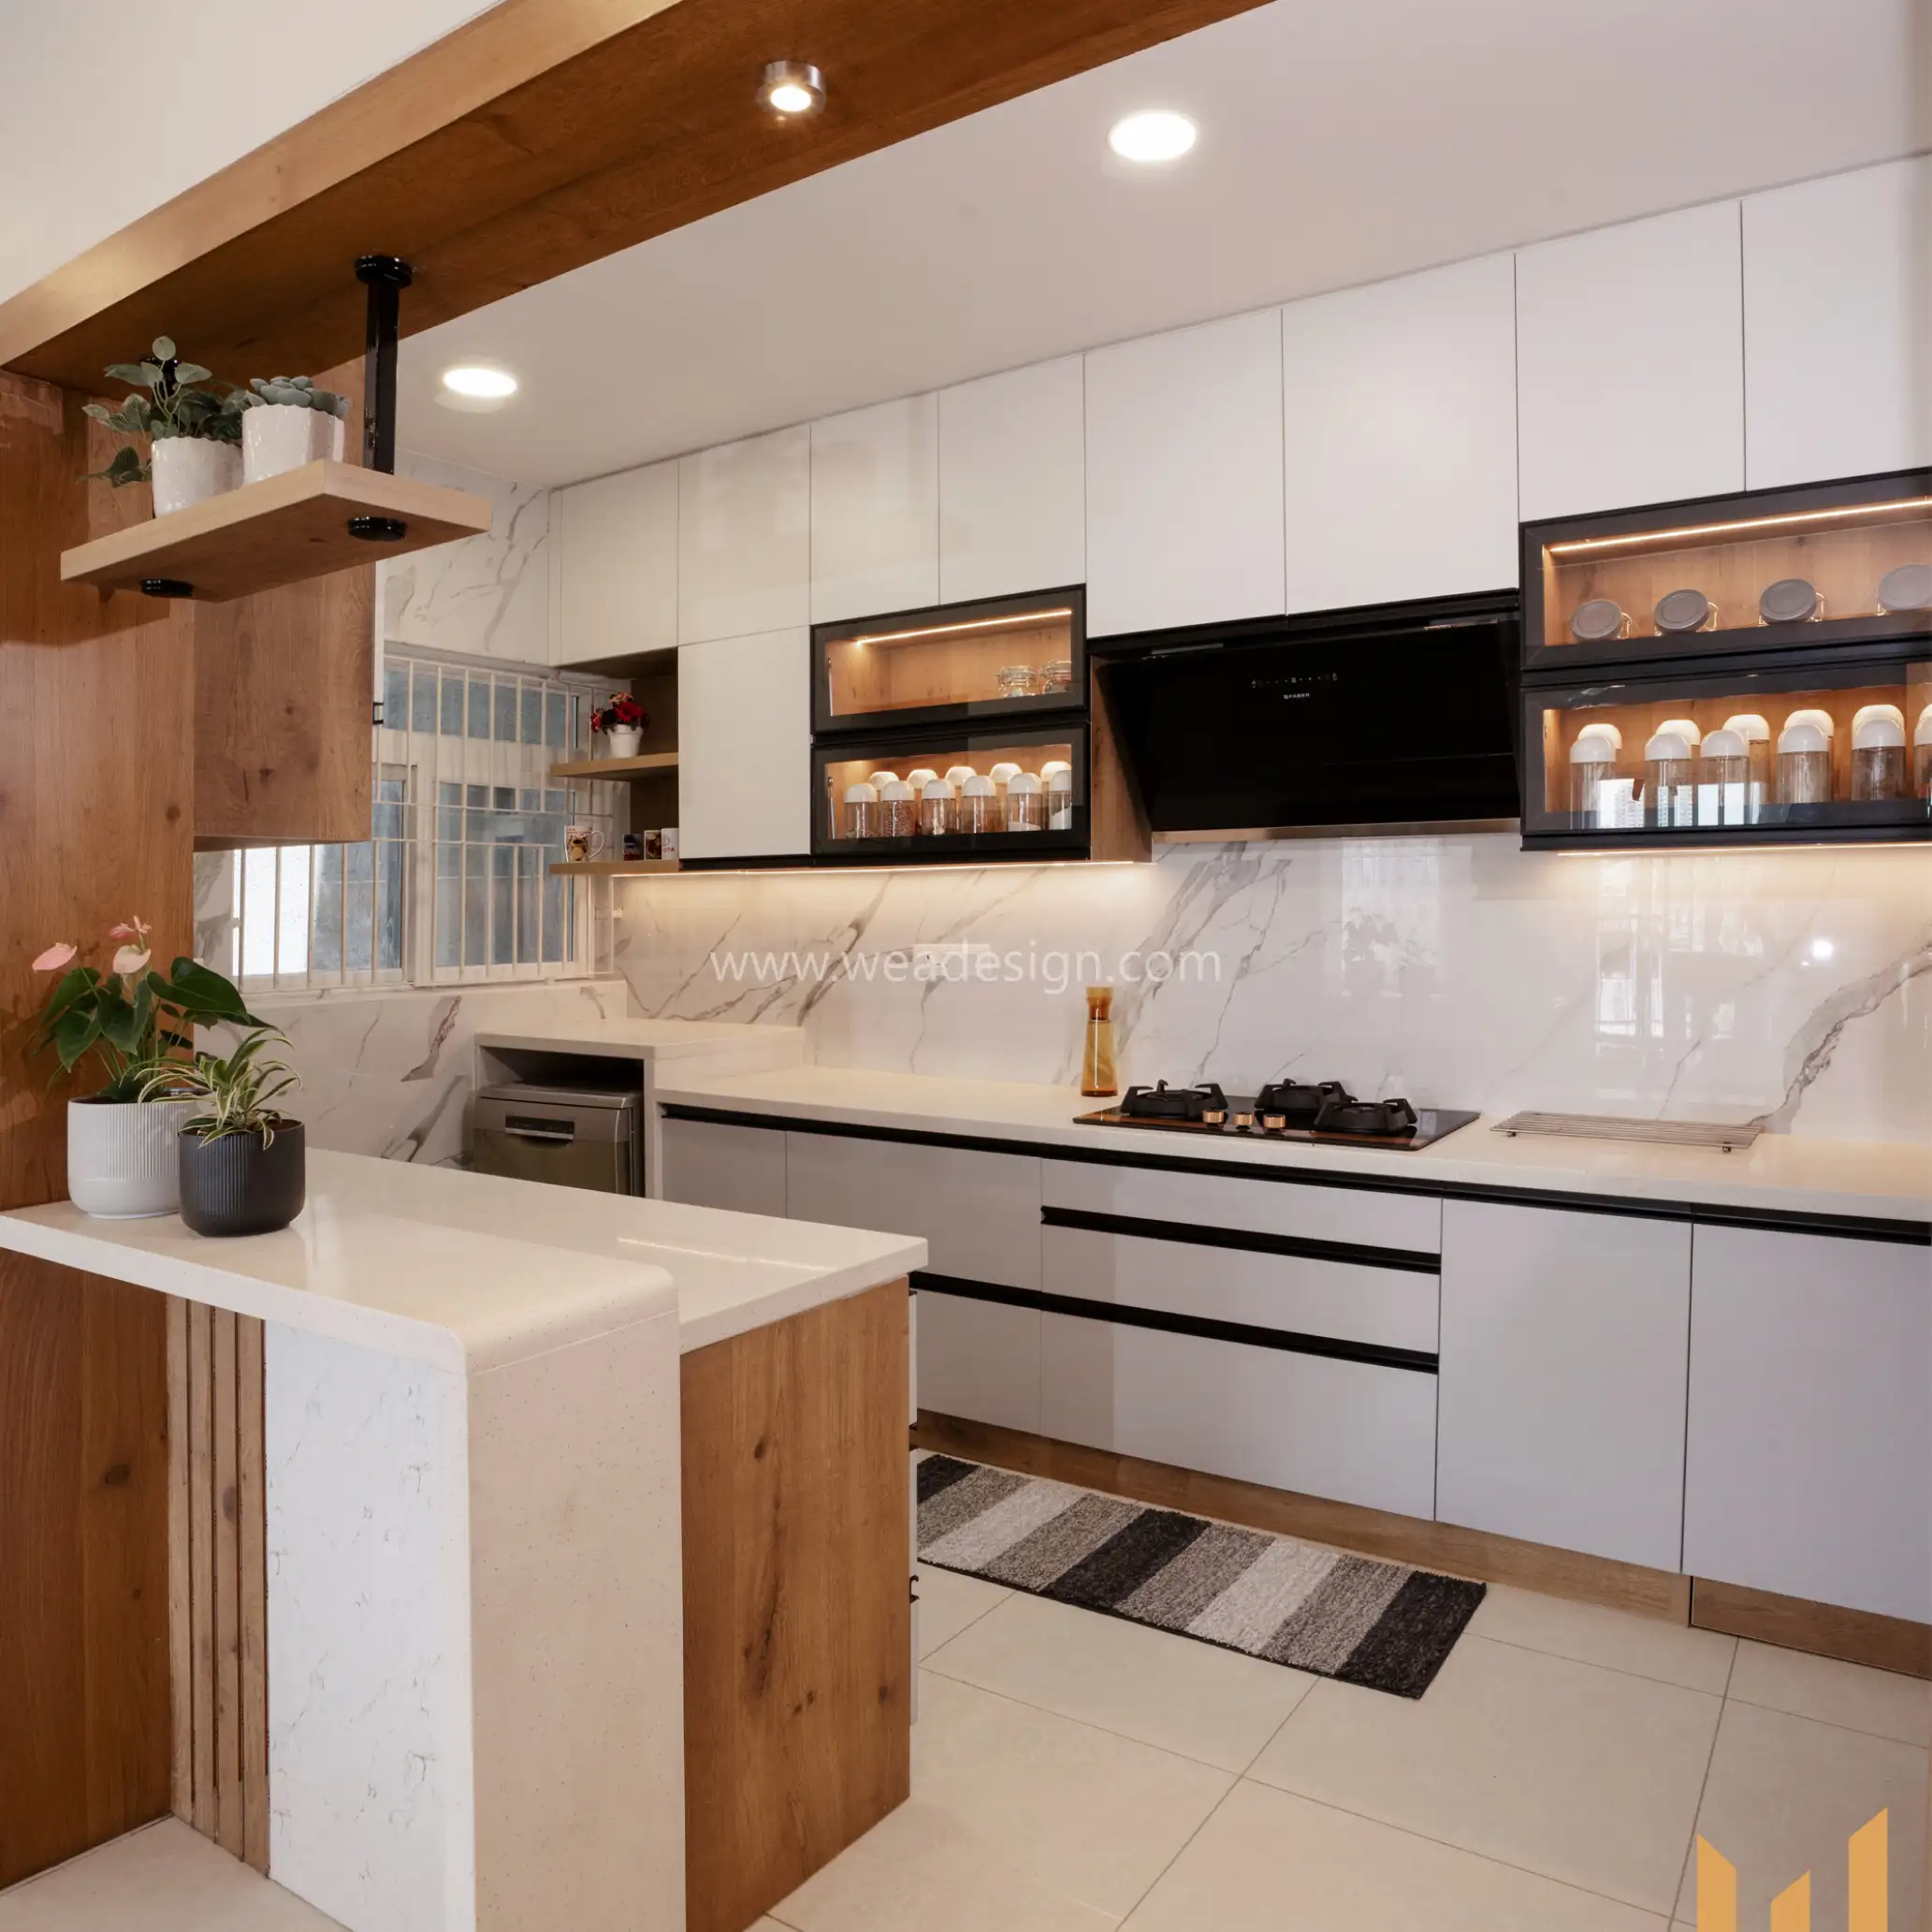 interior designers company in bangalore designed a u-shaped kitchen